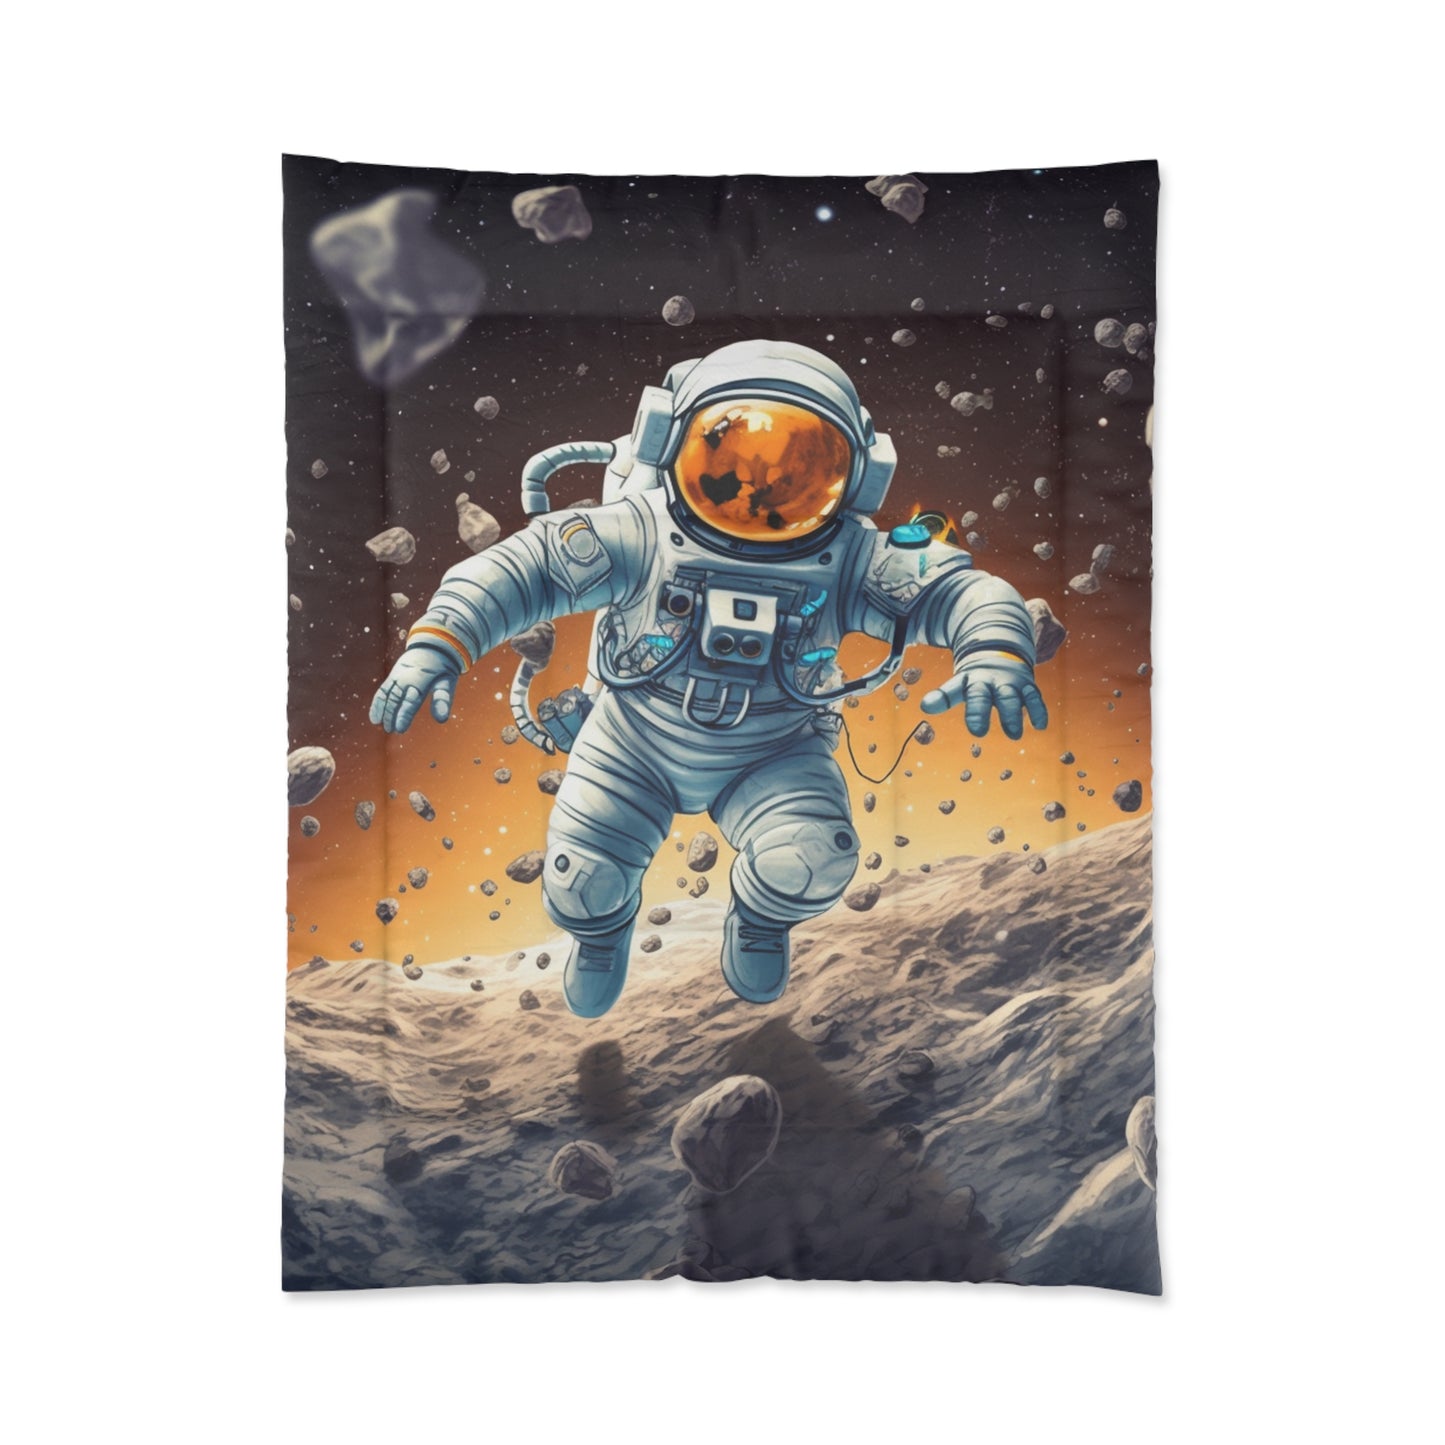 Galactic Adventurer - Celestial Star Art: Deep Space Exploration - Comforter